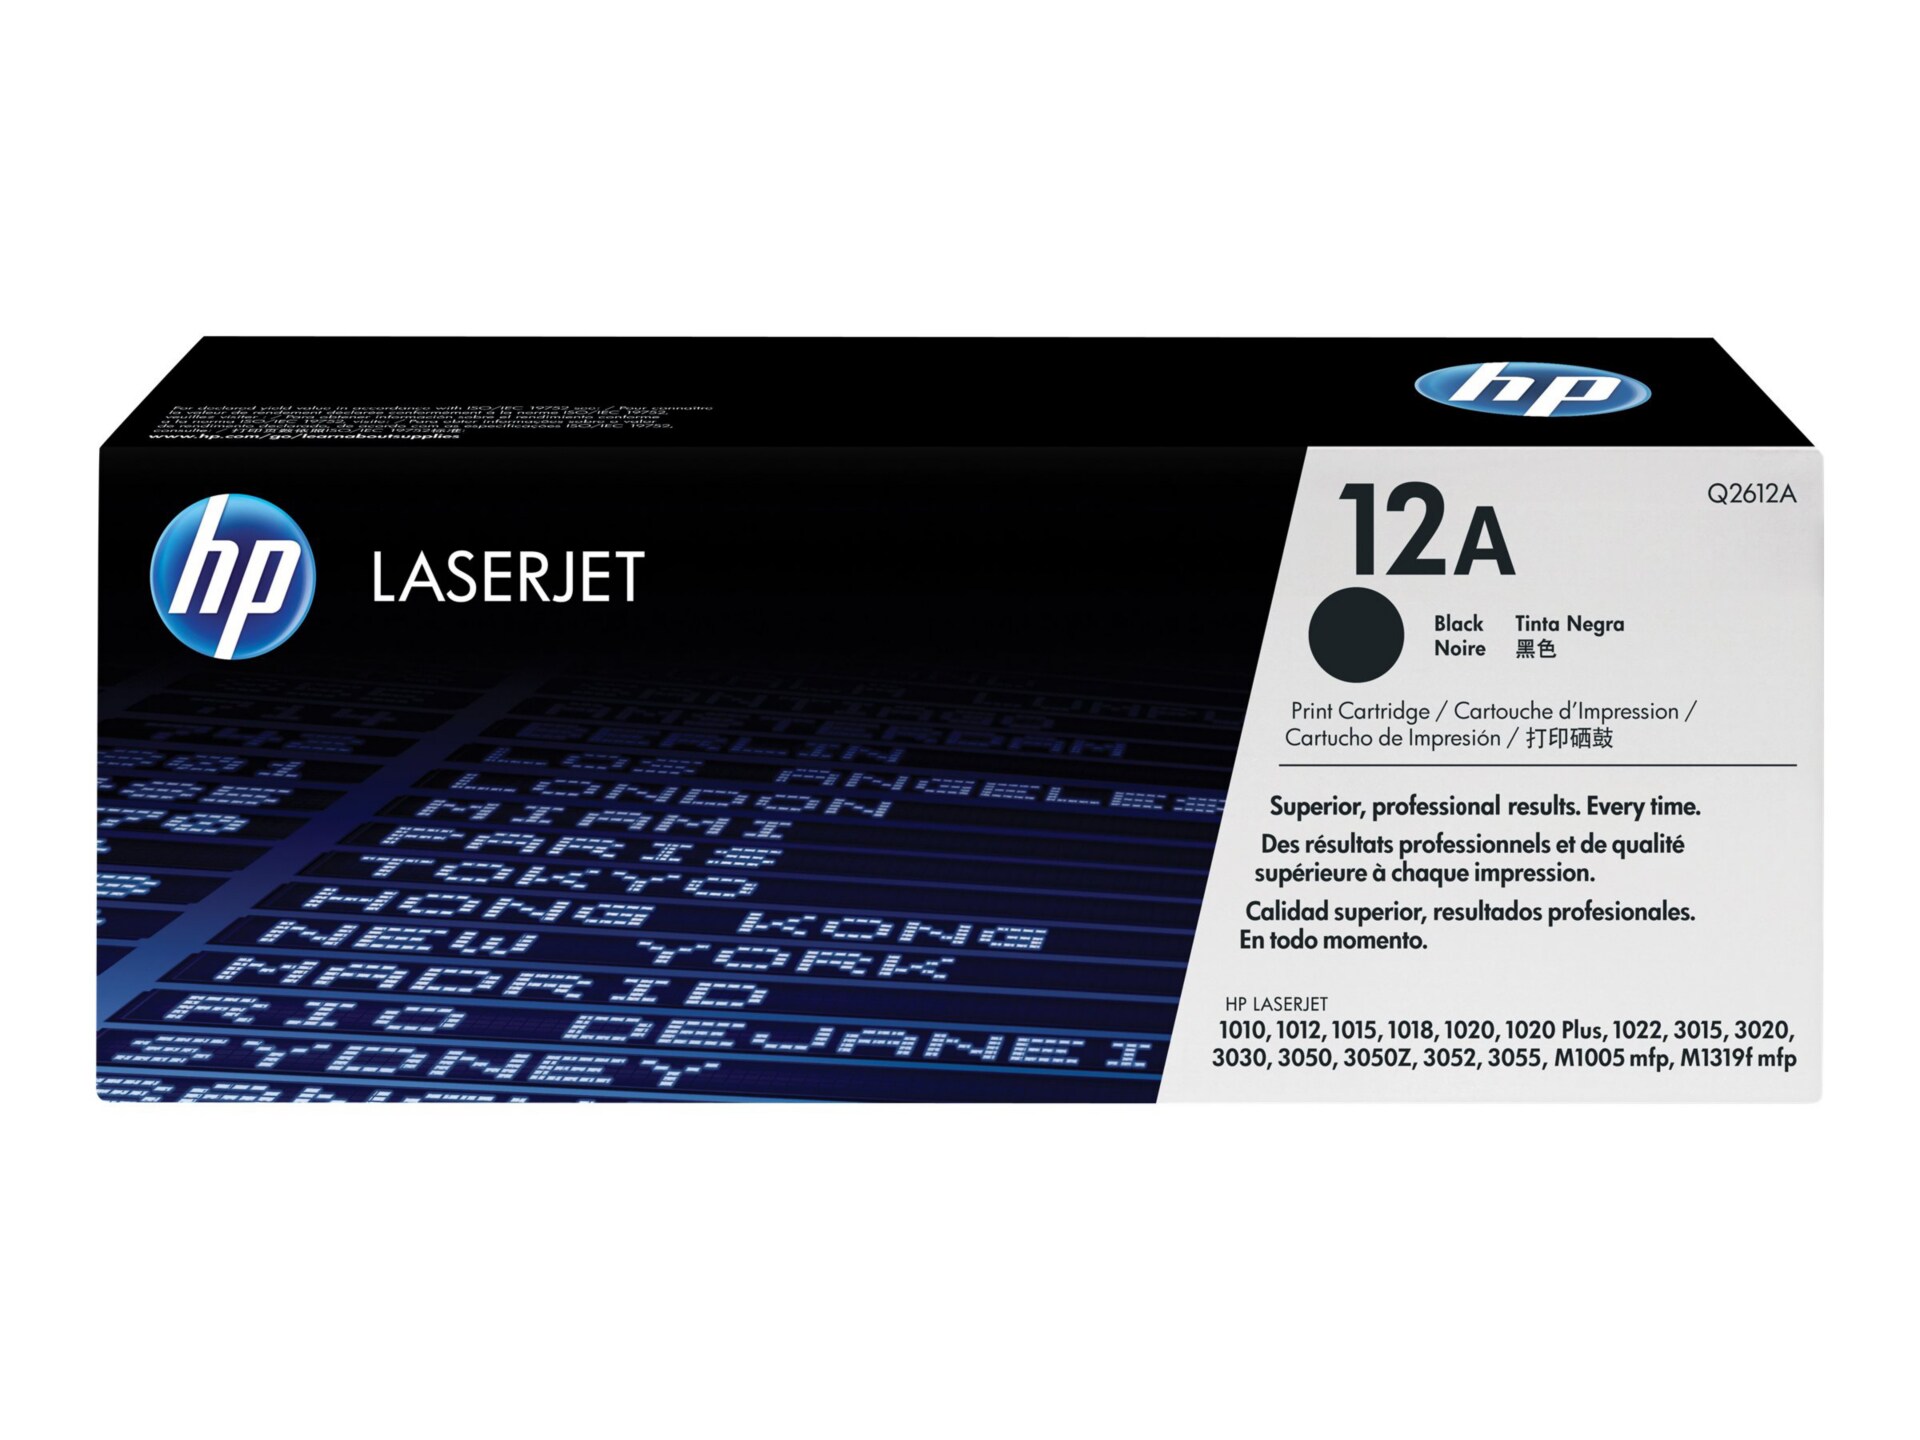 HP LaserJet 12A Black Toner Cartridge